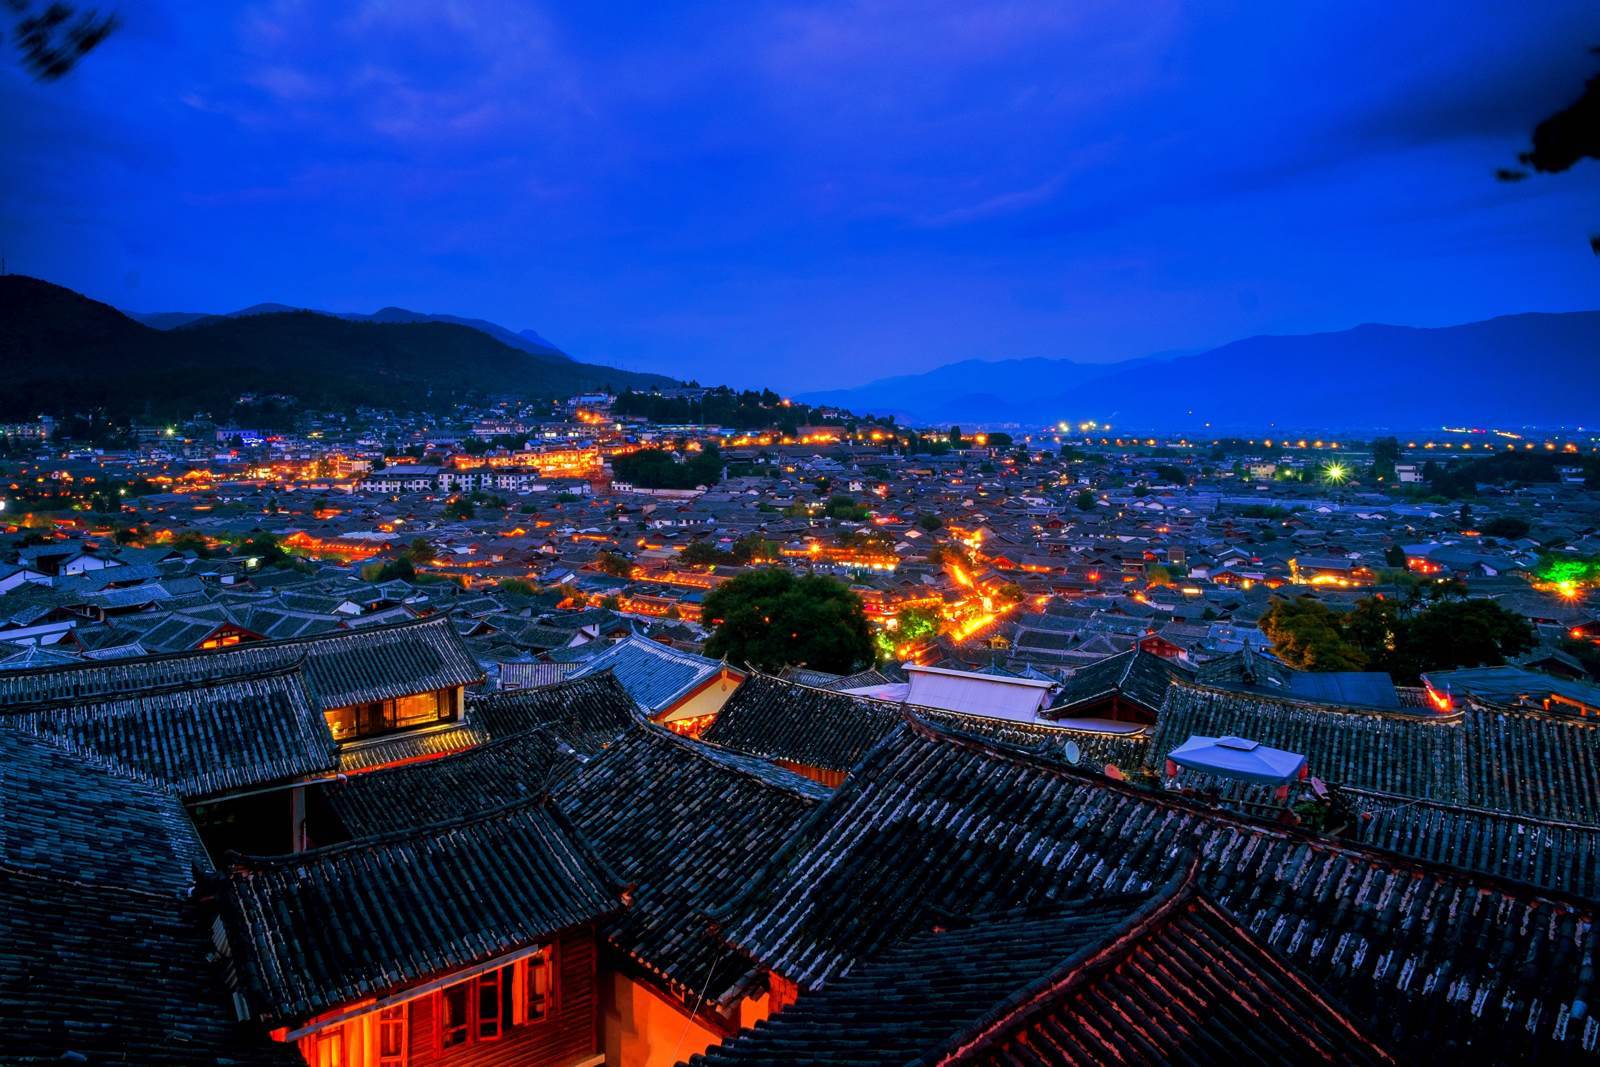 Lijiang Old Town